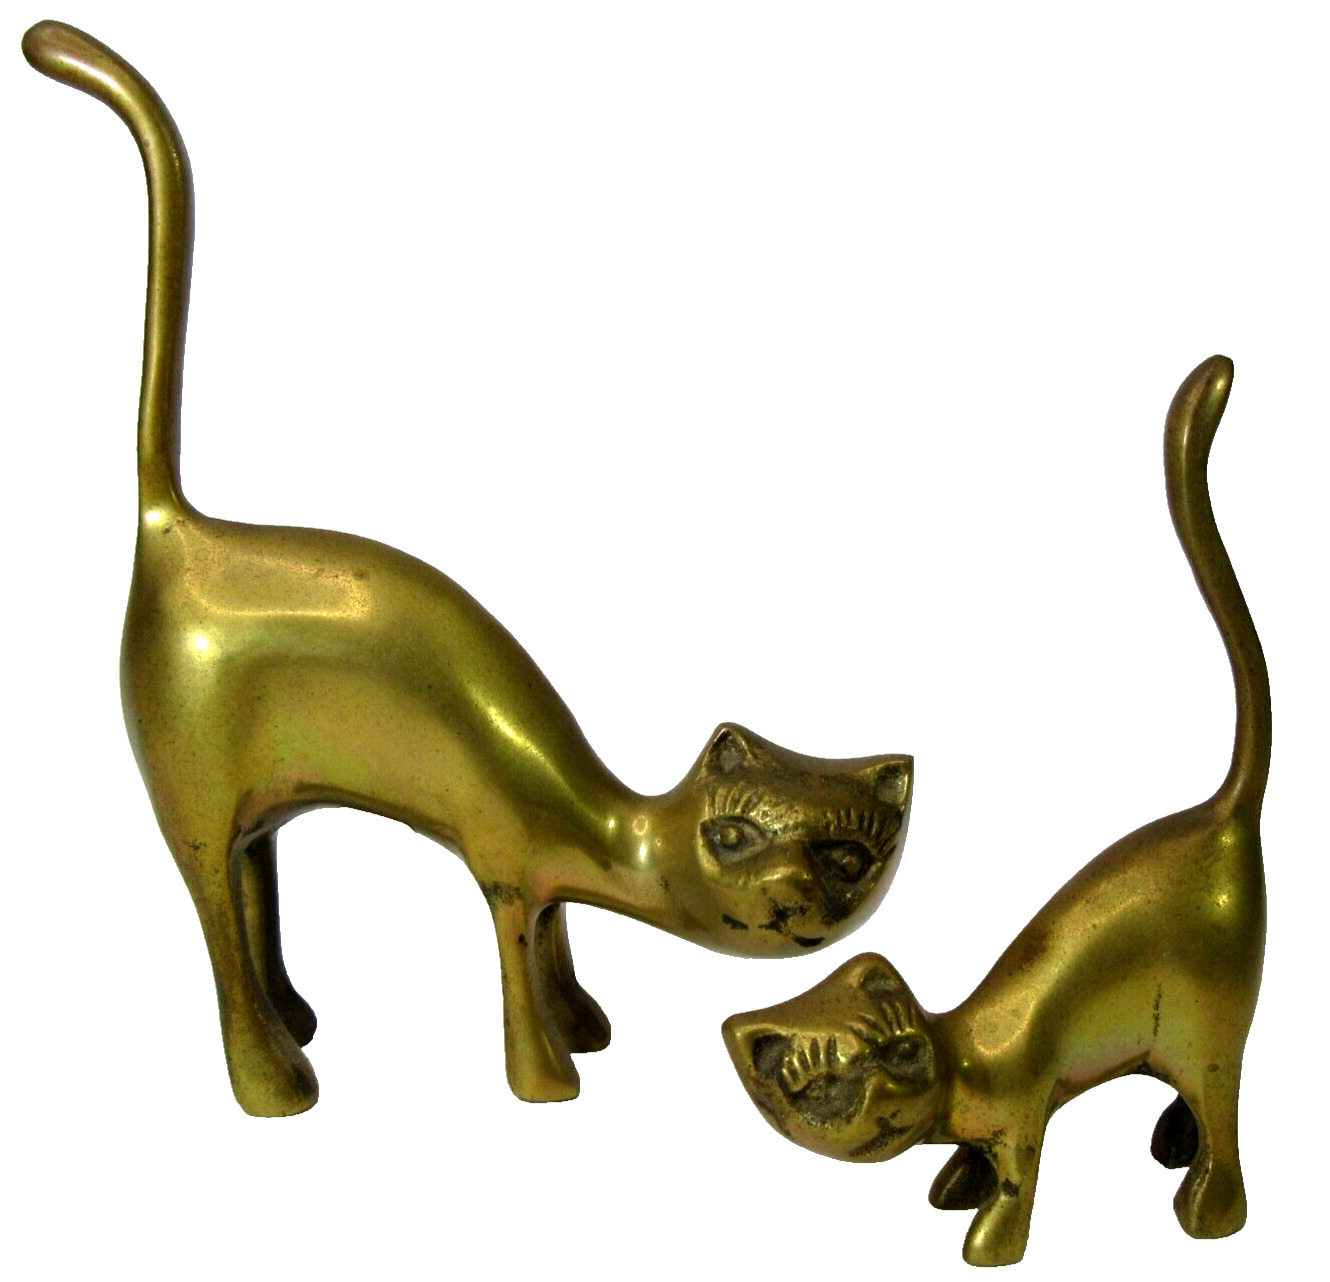 2 vintage solid brass cat RING HOLDER figurines Korea Mid-Century Modern kitsch